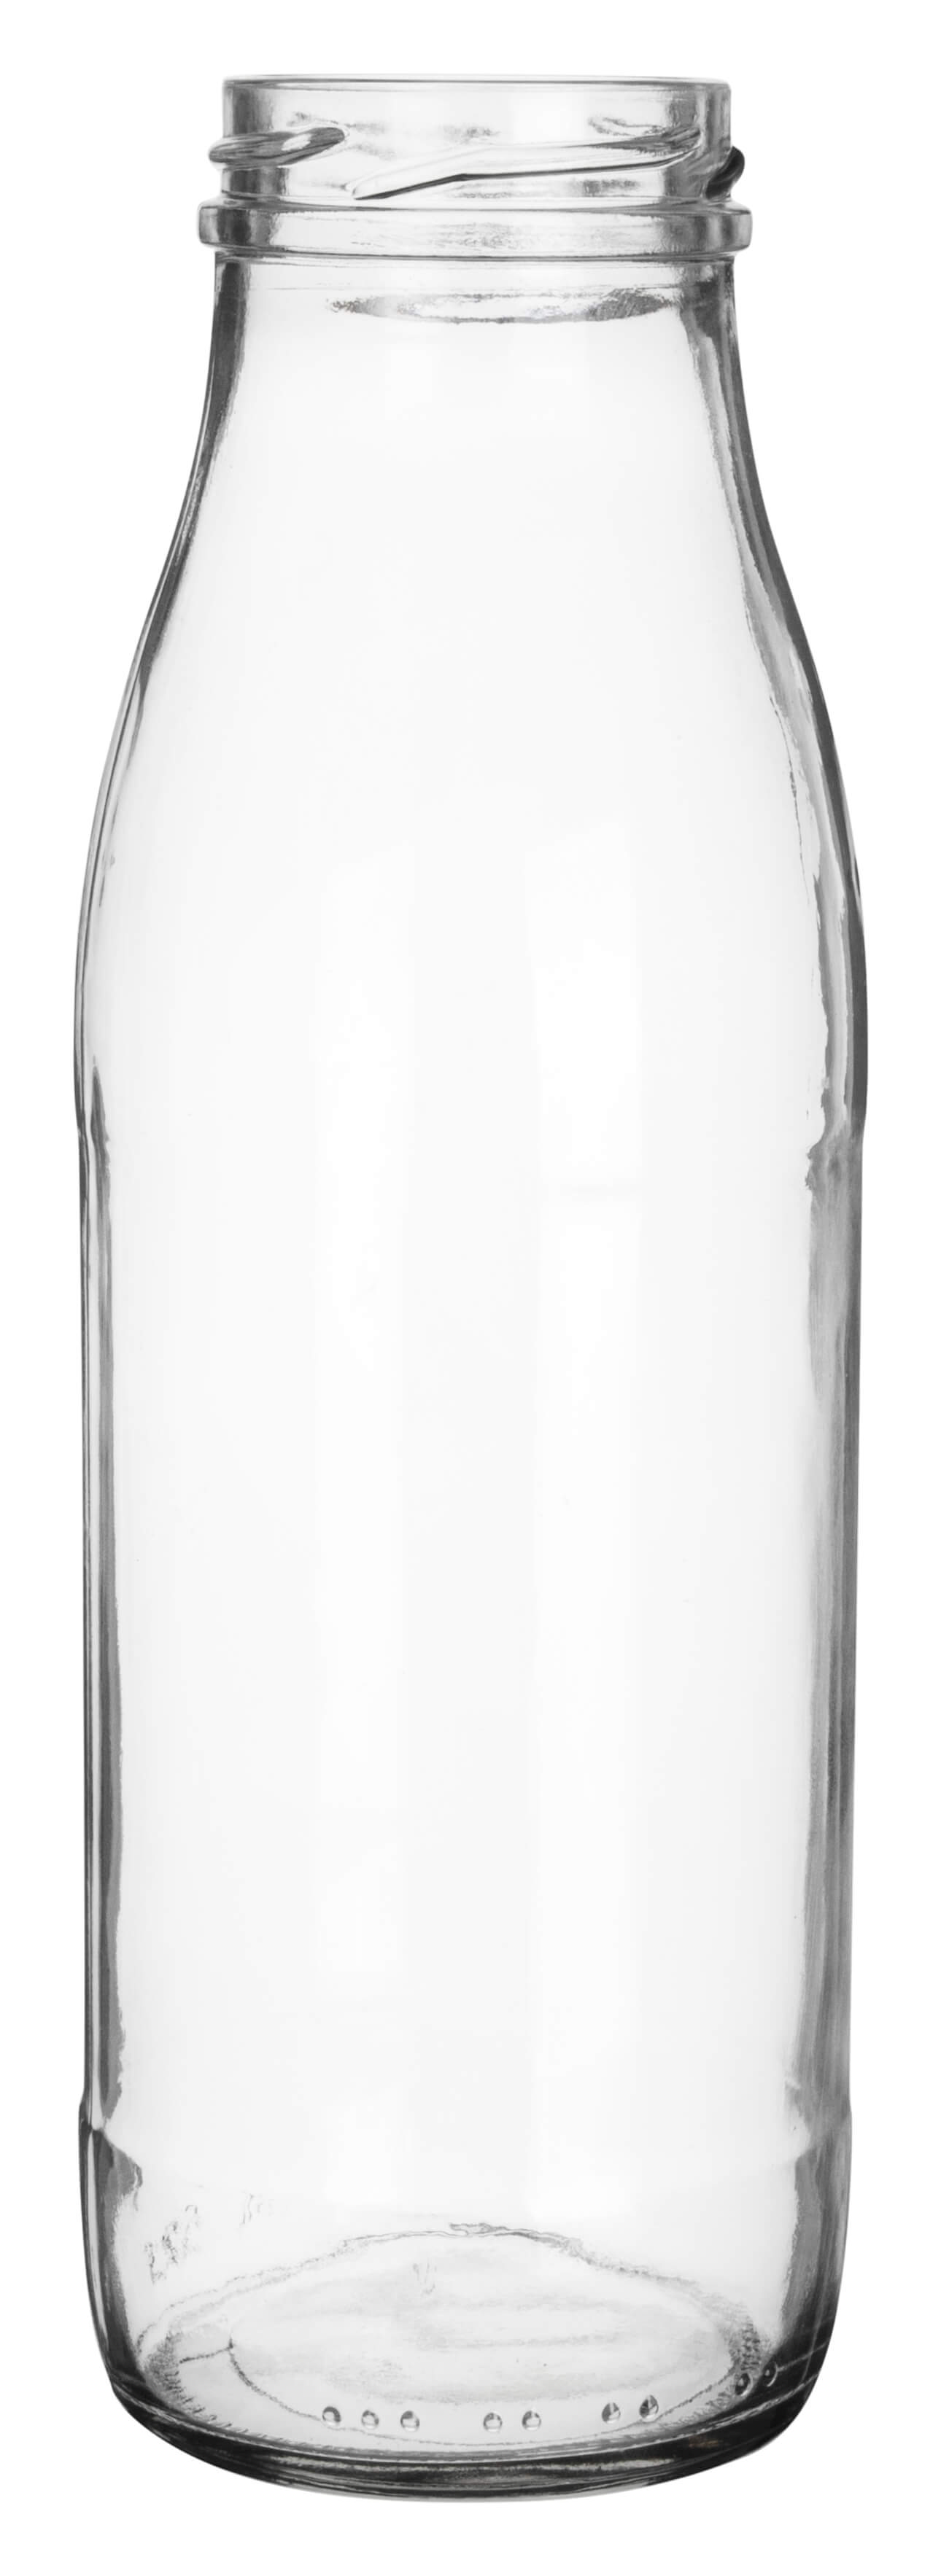 Milk bottle - 500ml